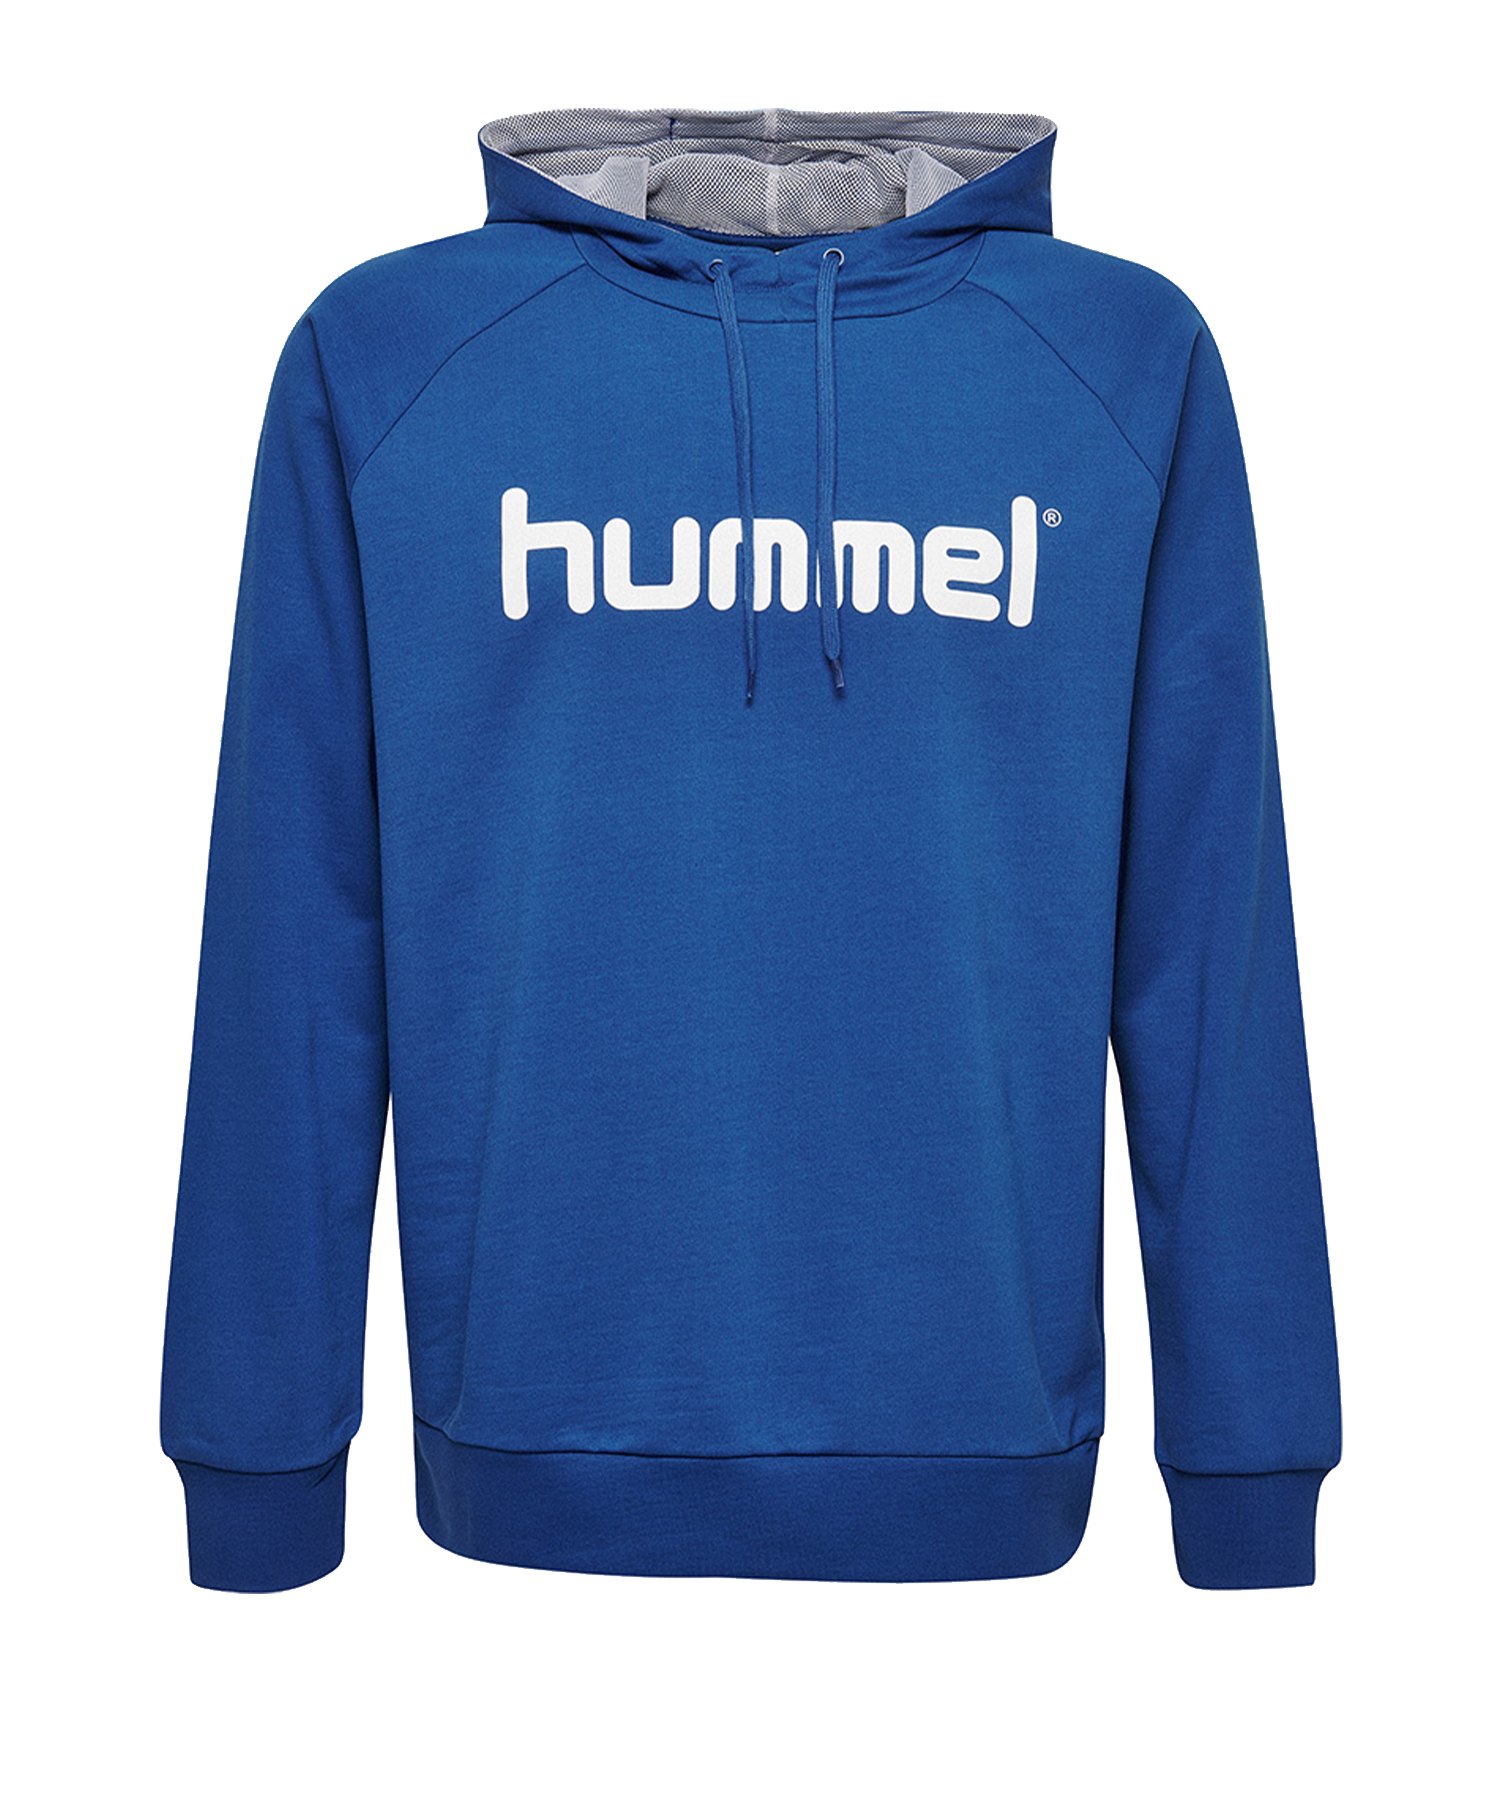 Hummel Cotton Logo Hoody Kids Blau F7045 - Blau